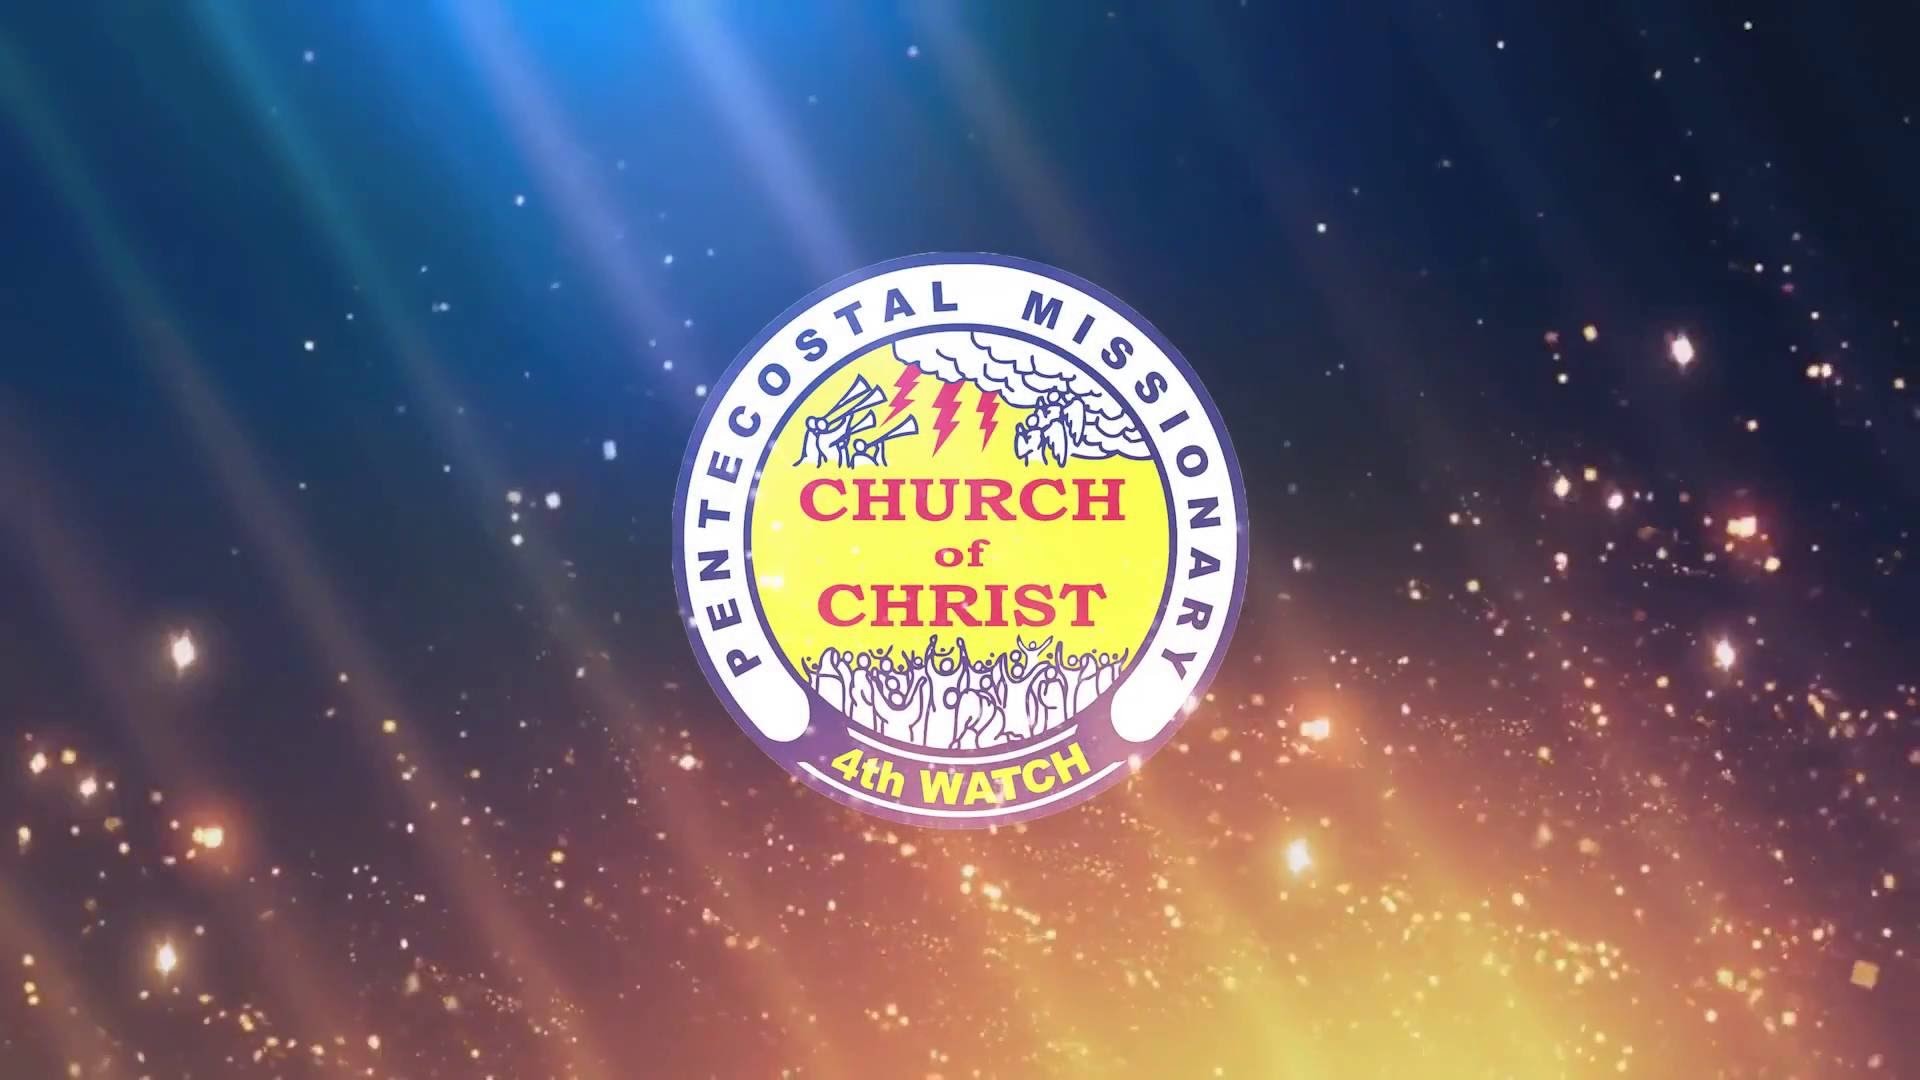 1920x1080 PMCC (4th Watch) of South Bay - 27th Church Anniversary Invite